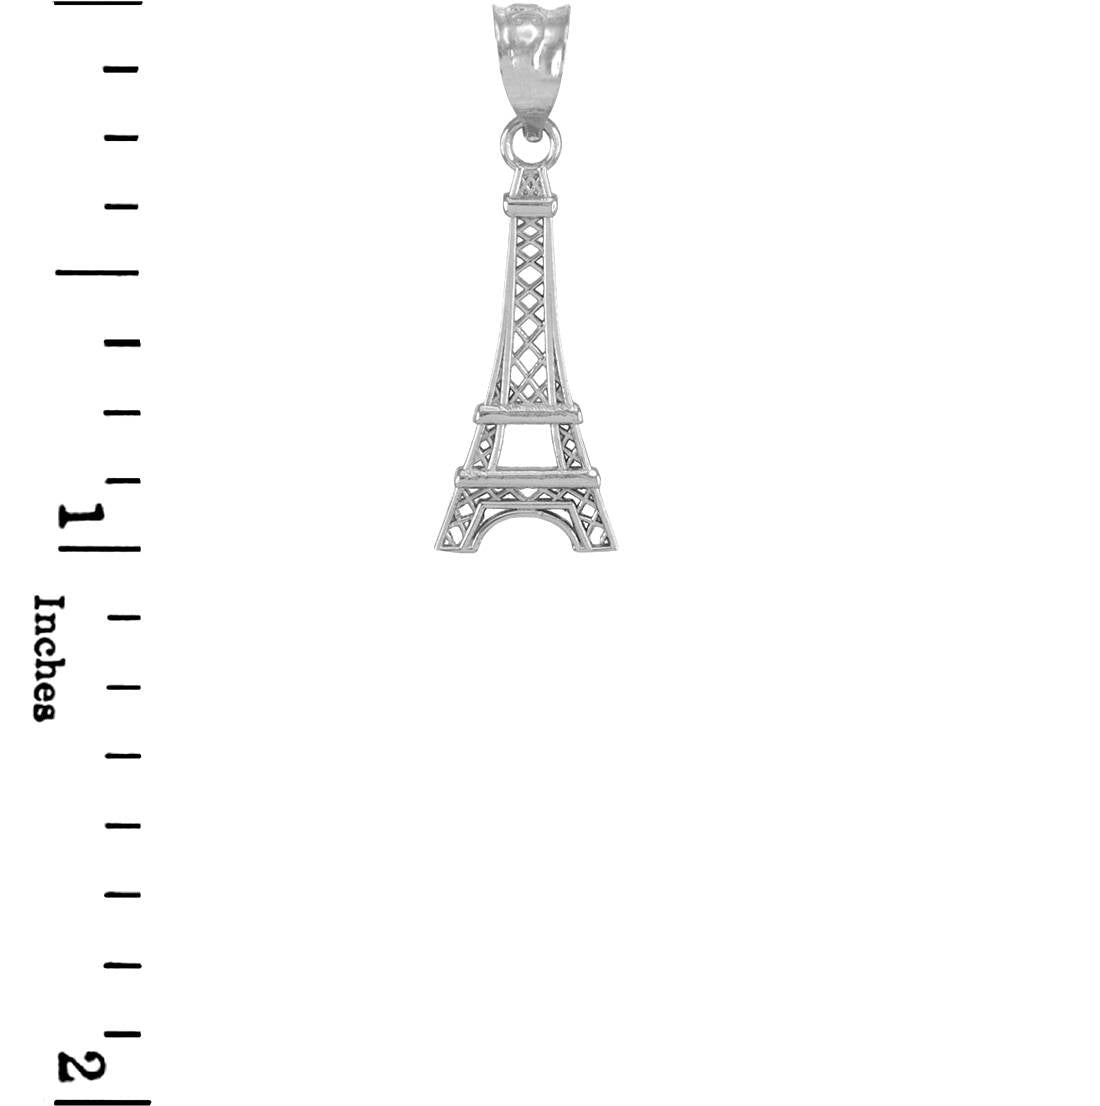 Gold Paris Eiffel Tower Charm Necklace (yellow, white, rose gold, 10k, 14k) Karma Blingz